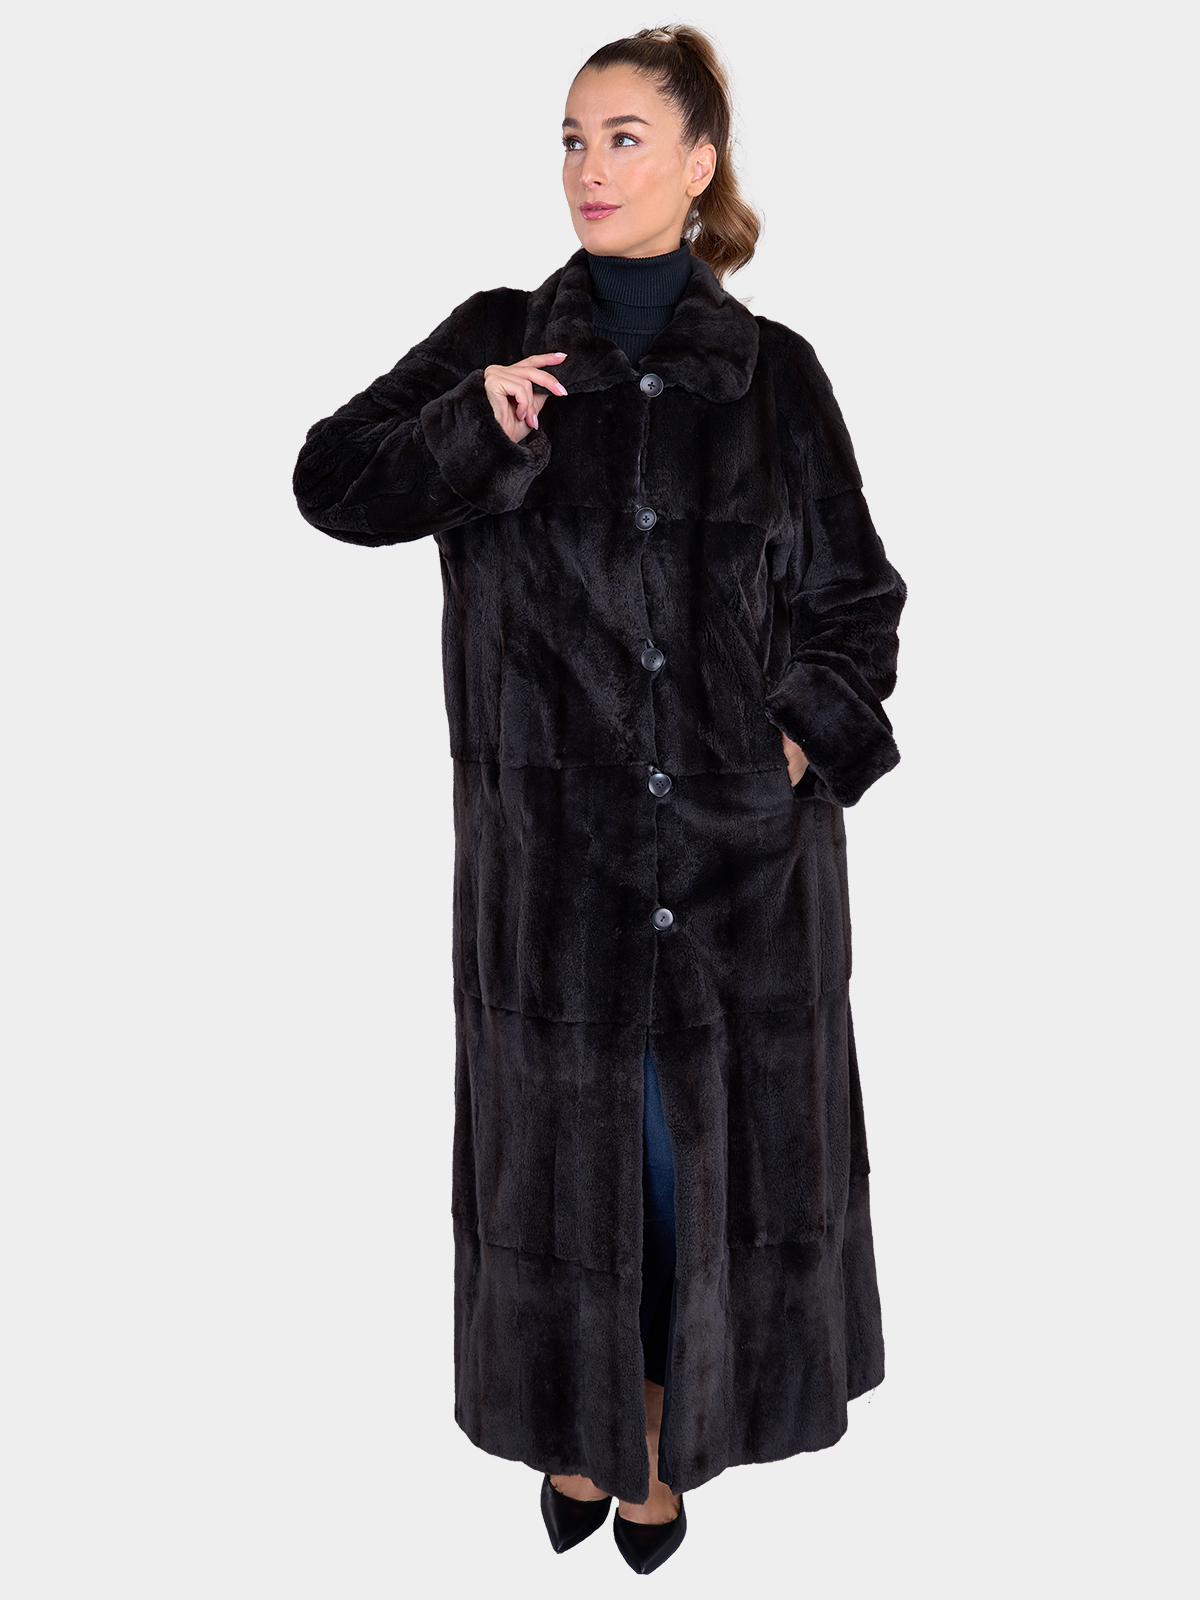 Woman's Black Sheared Mink Fur Lined Raincoat